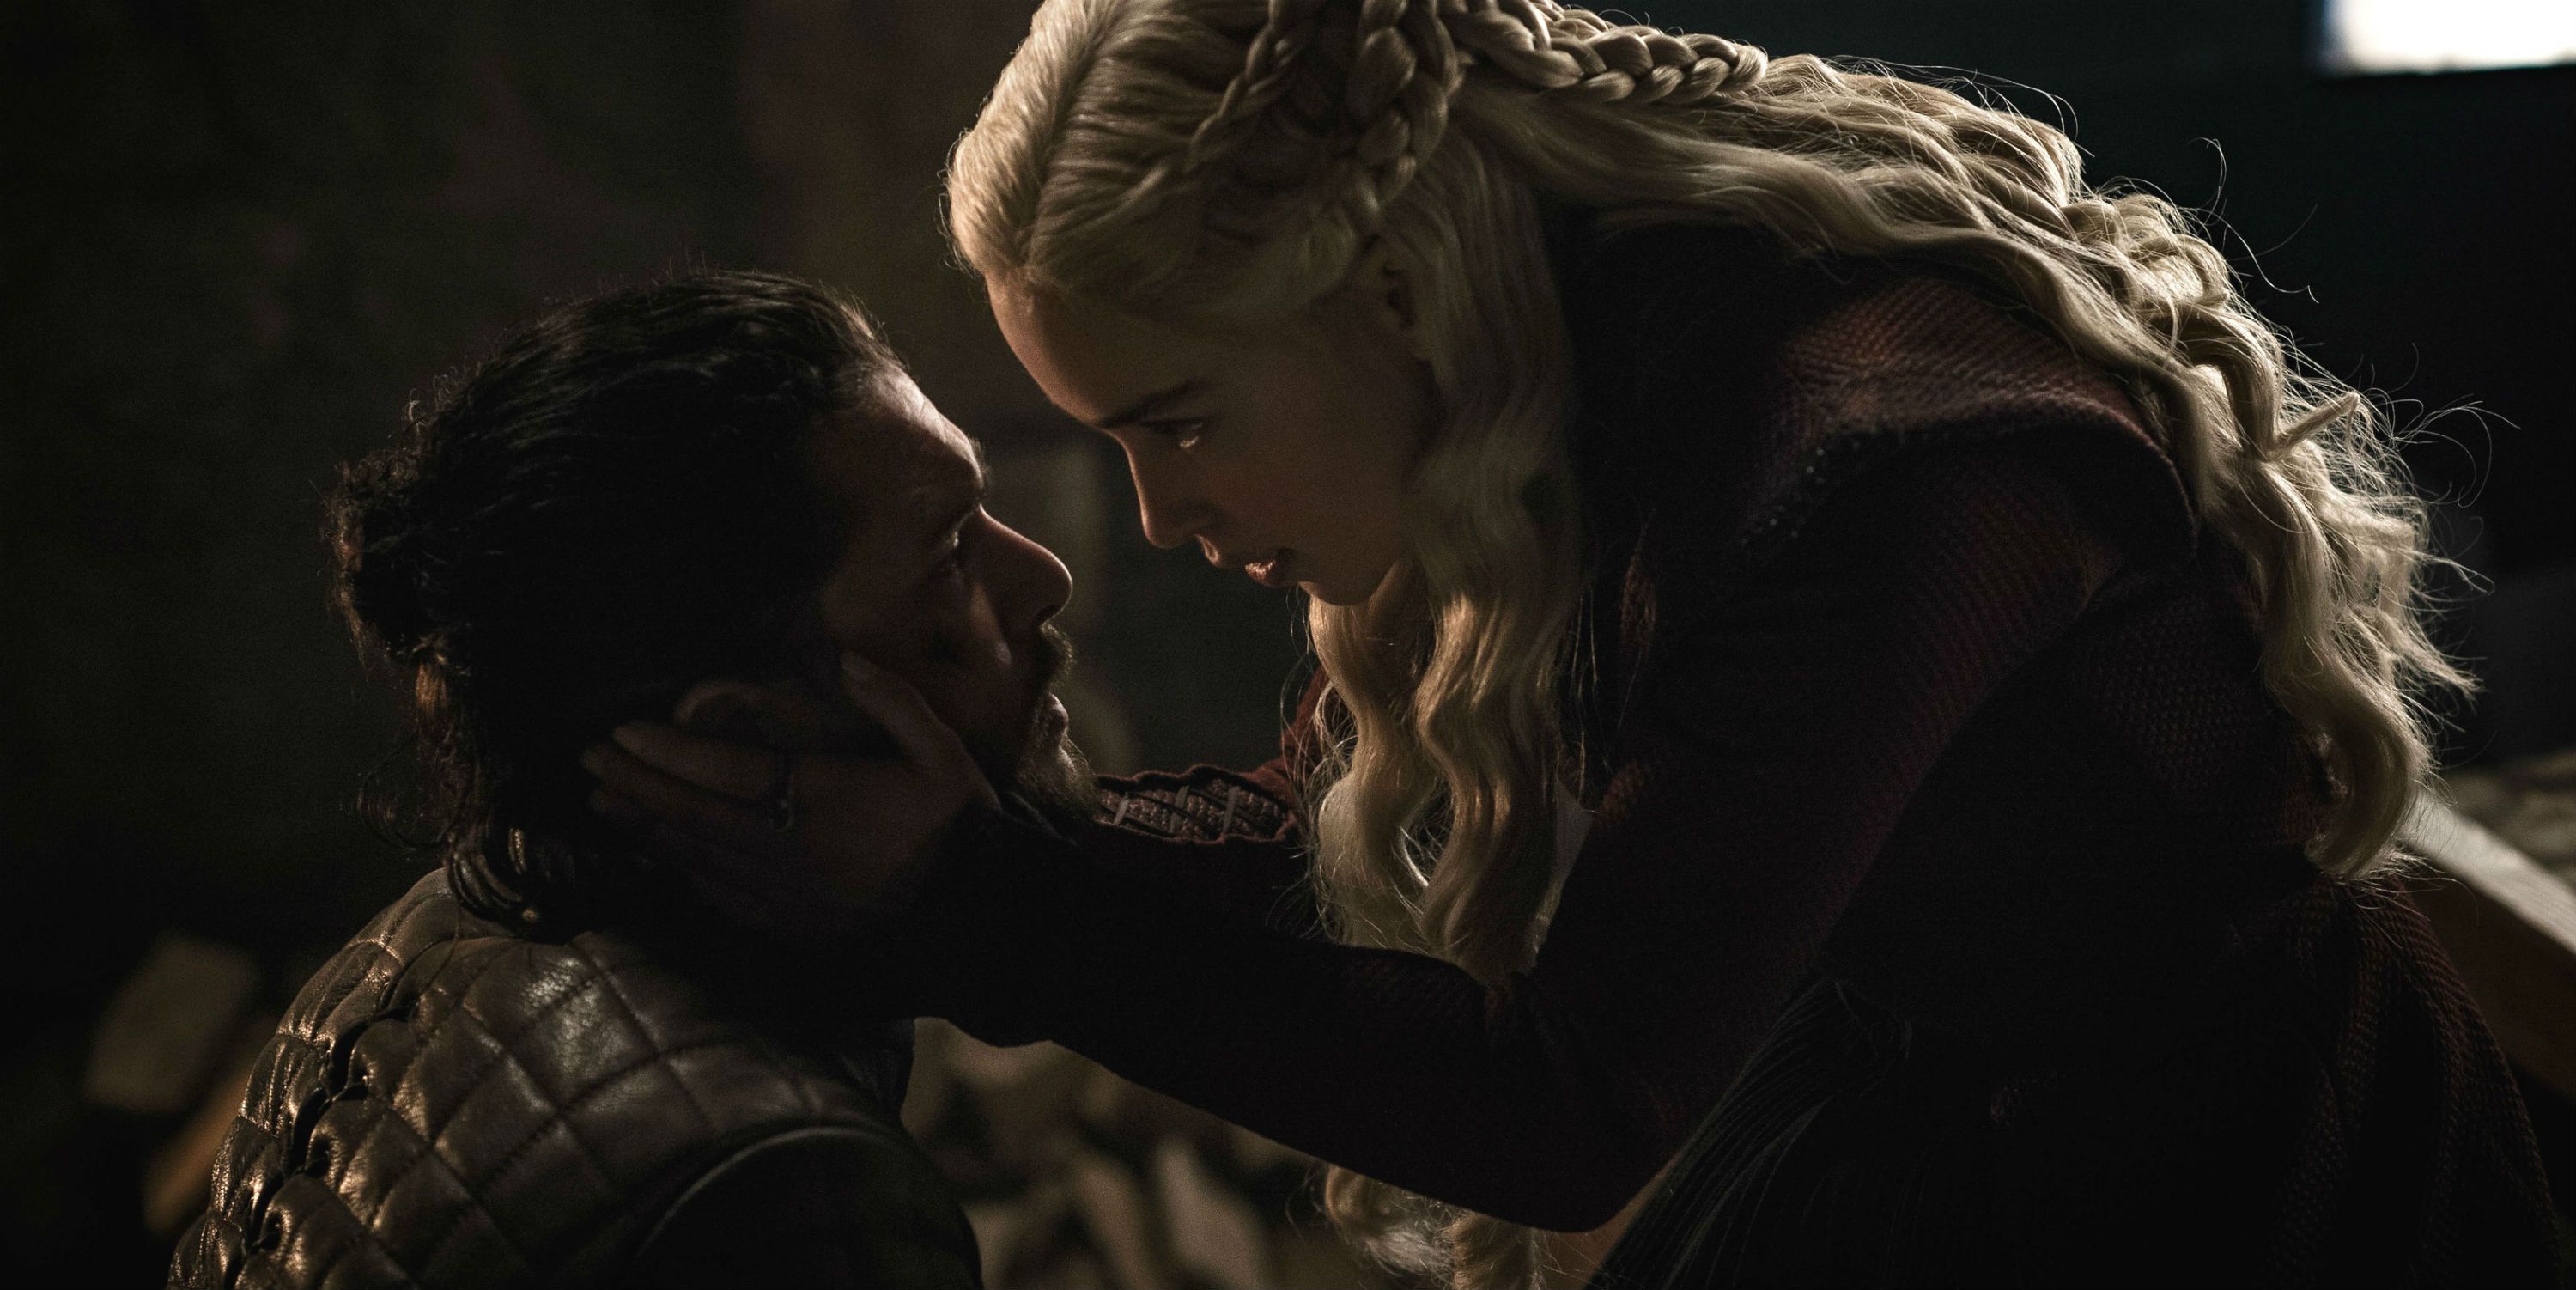 Jon and Daenerys in Game of Thrones season 8 episode 4